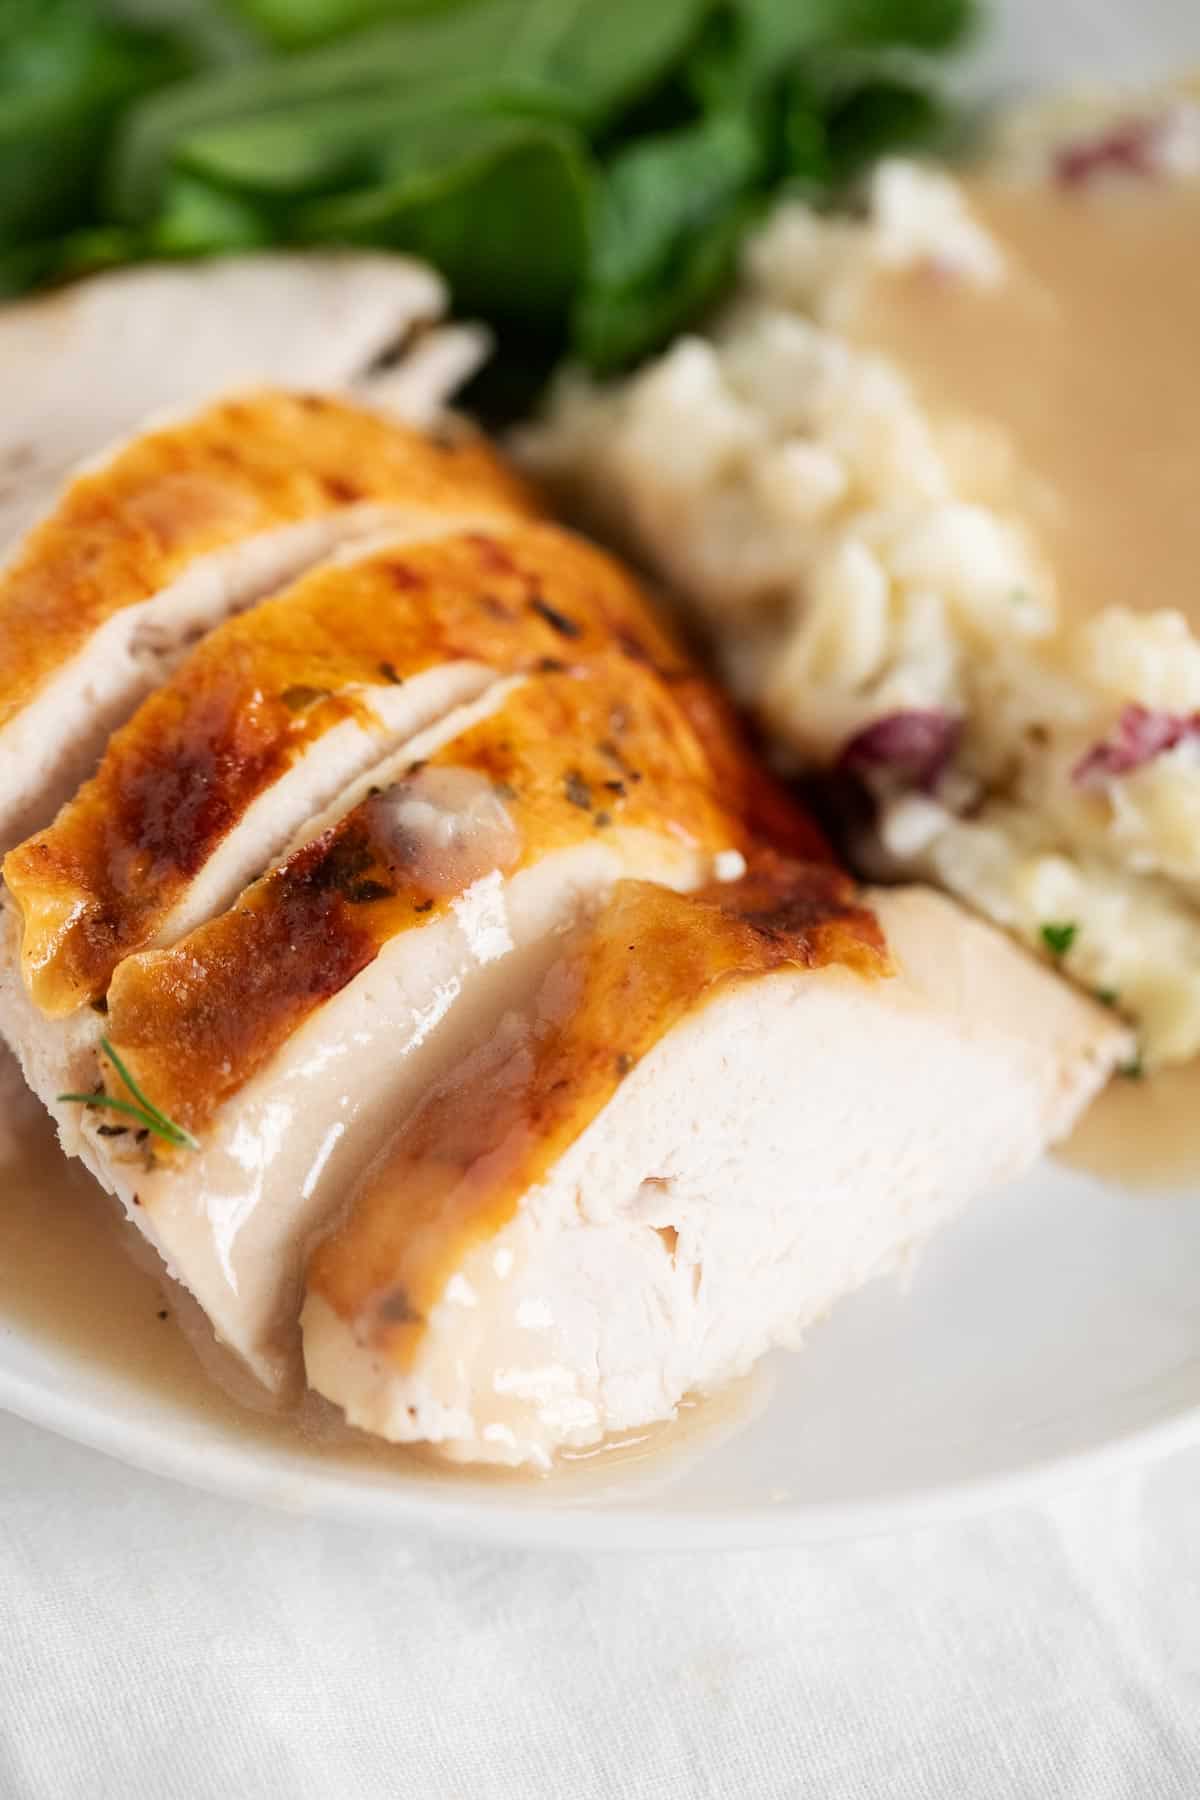 Turkey with gravy on plate.